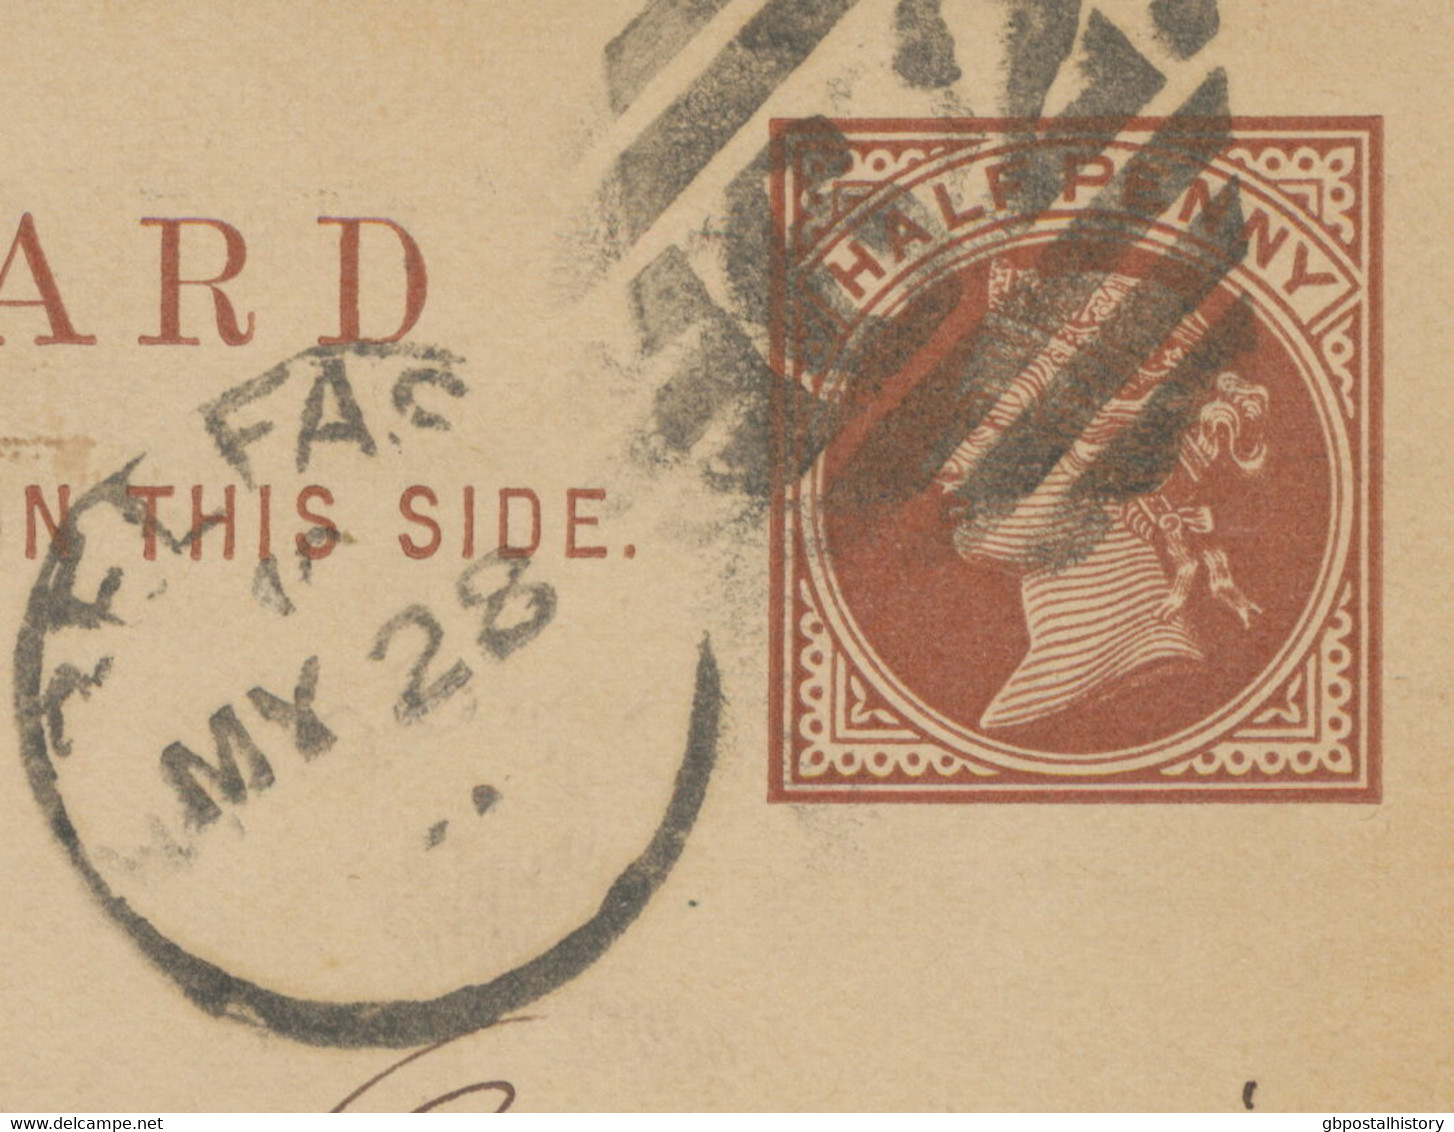 GB „62 / BELFAST“ IRISH Duplex Postcard Uprated With ½ D Jubilee To BERN 1891 - Irlande Du Nord